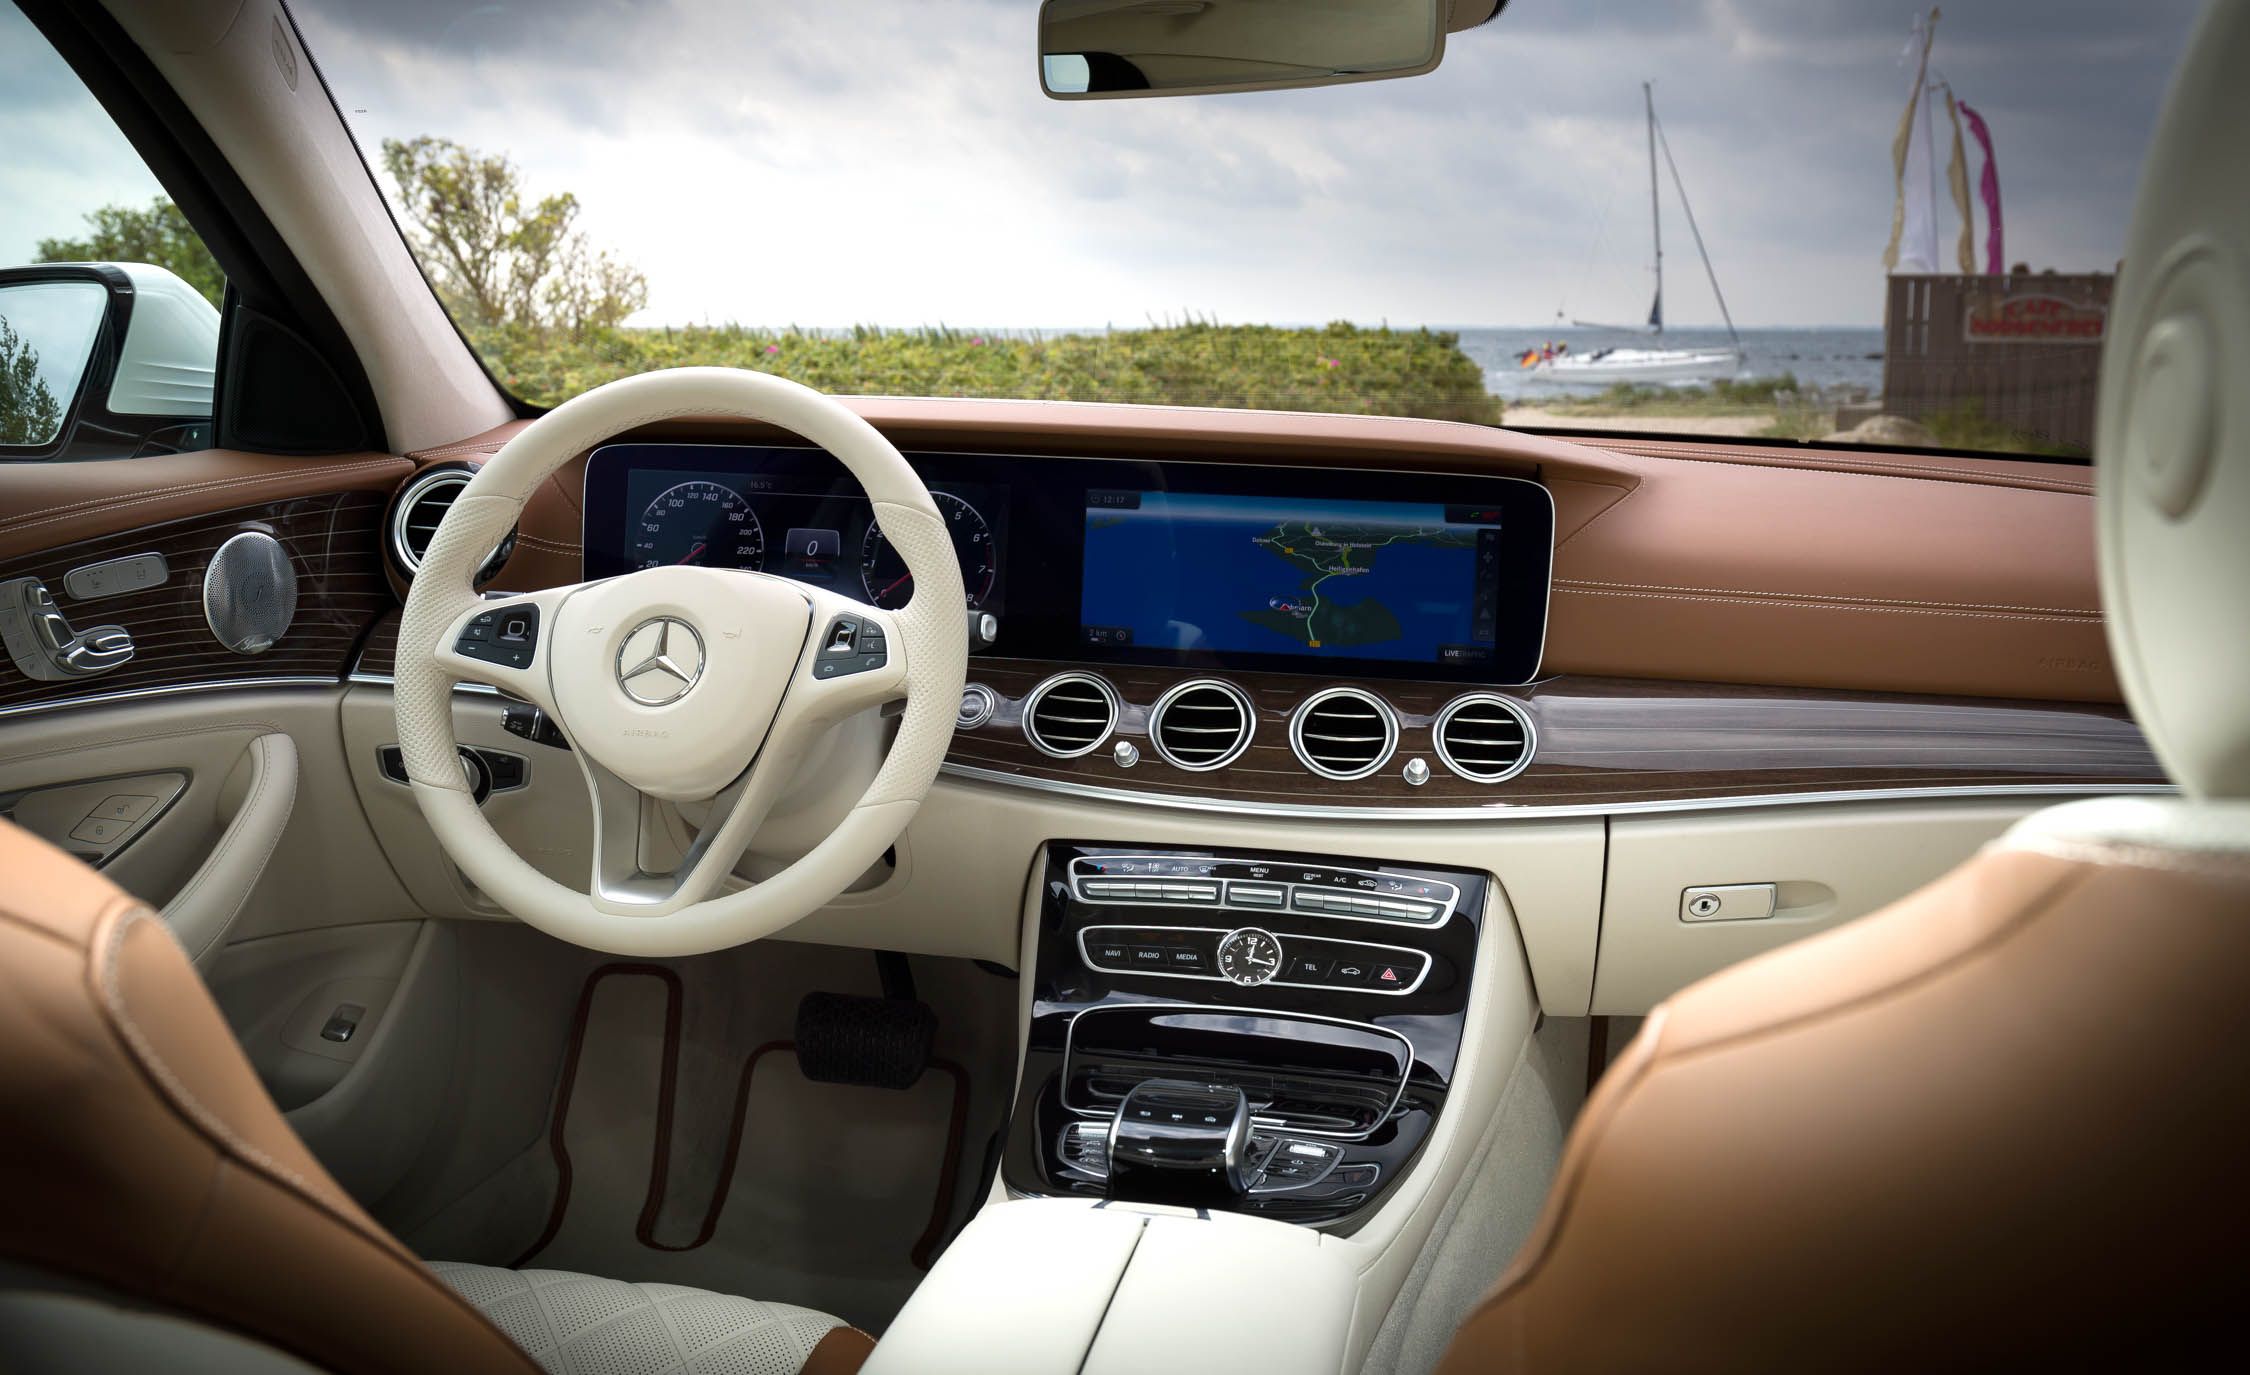 2017 Mercedes Benz E Class Wagon Interior Dashboard (View 7 of 24)